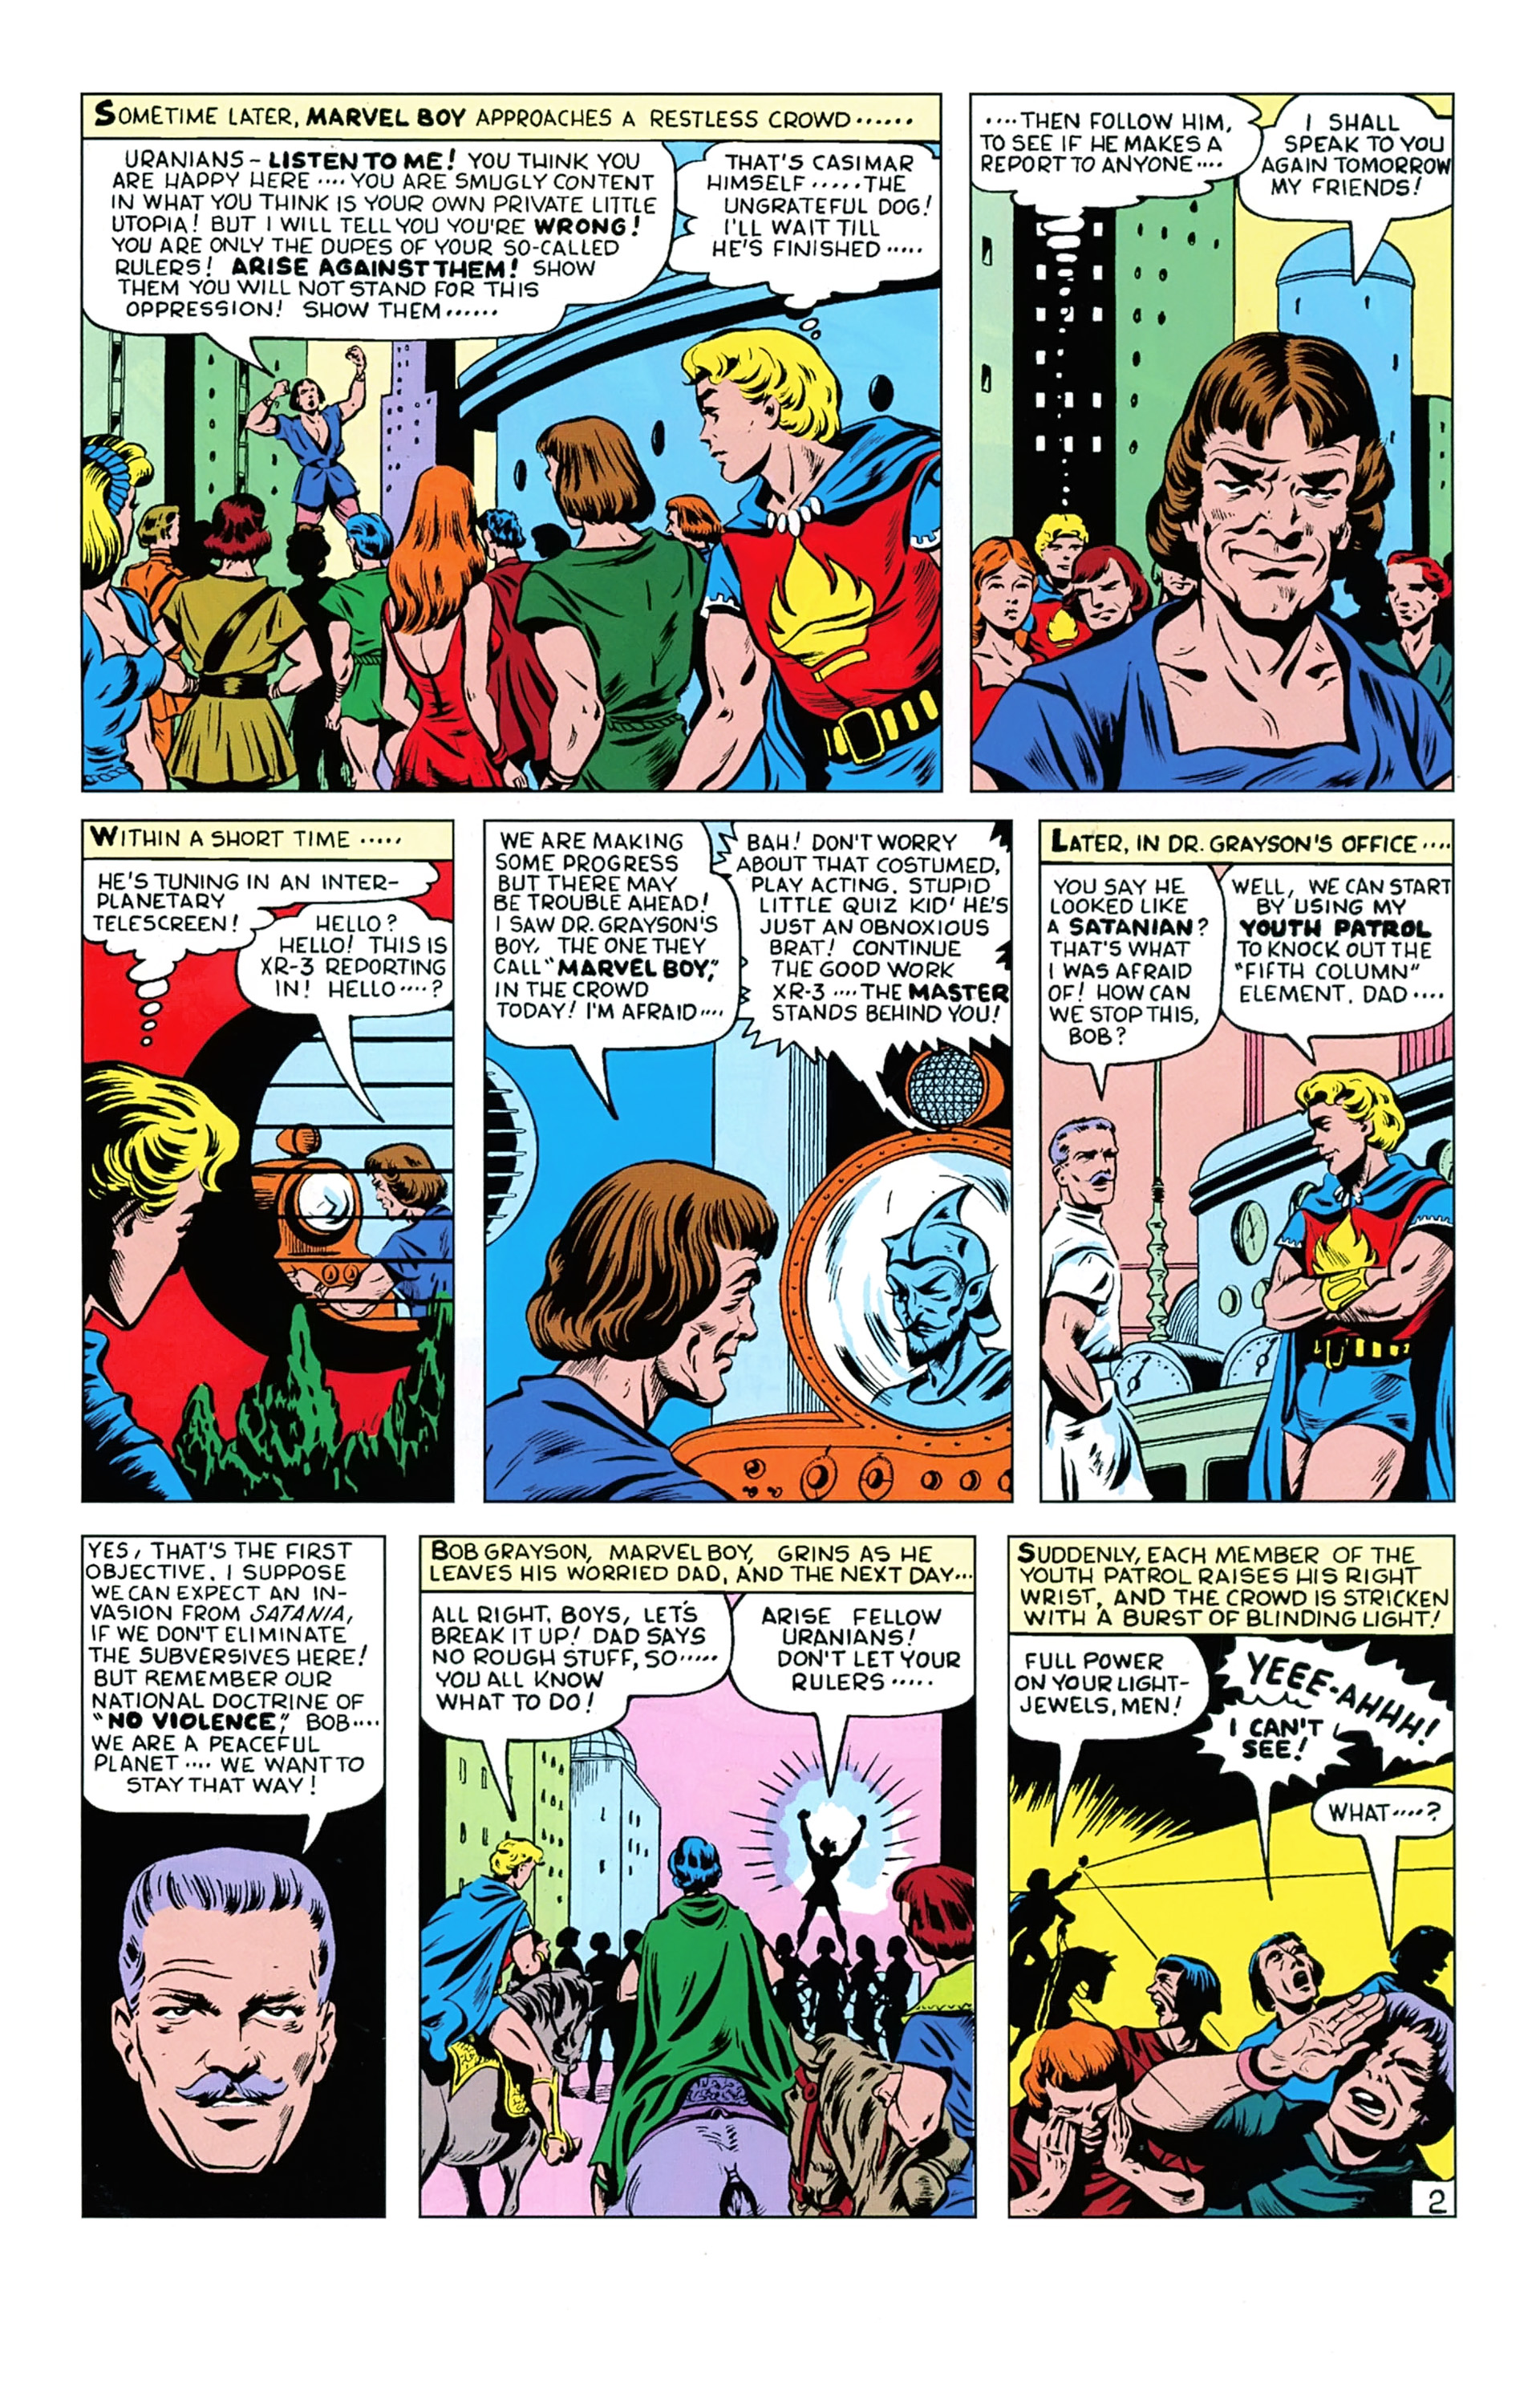 Read online Marvel Boy: The Uranian comic -  Issue #1 - 39